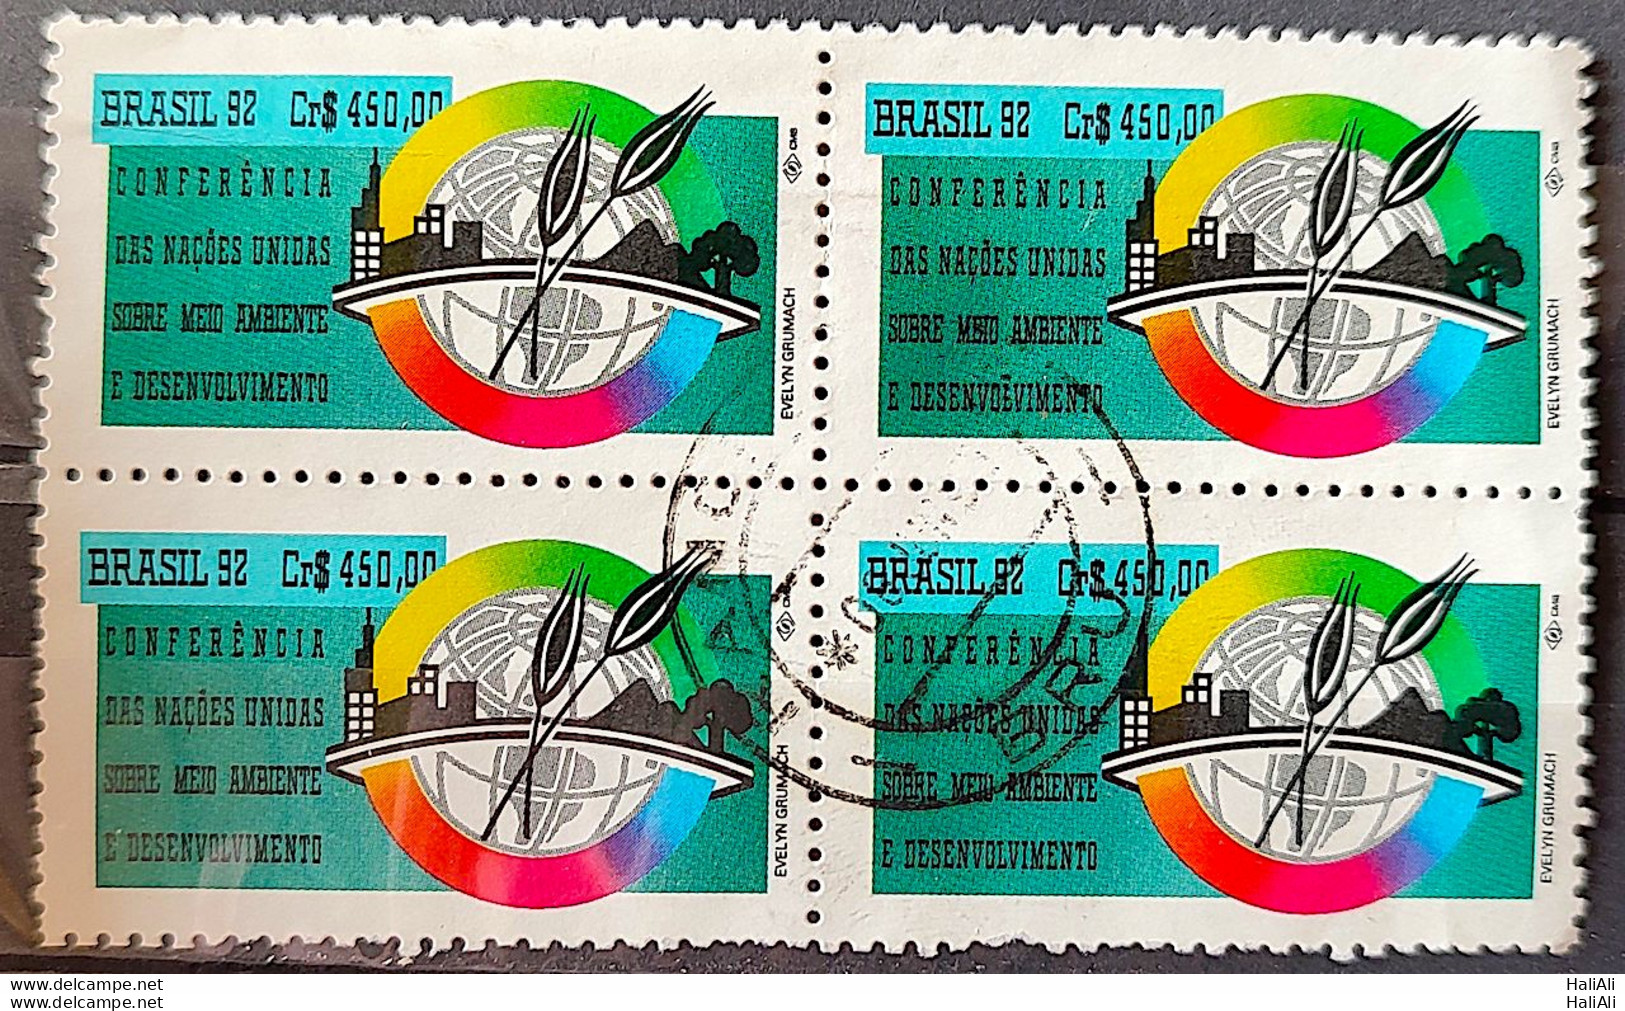 C 1799 Brazil Stamp Conference Eco 92 Rio De Janeiro Environment 1992 Block Of 4 Circulated 1 - Usados